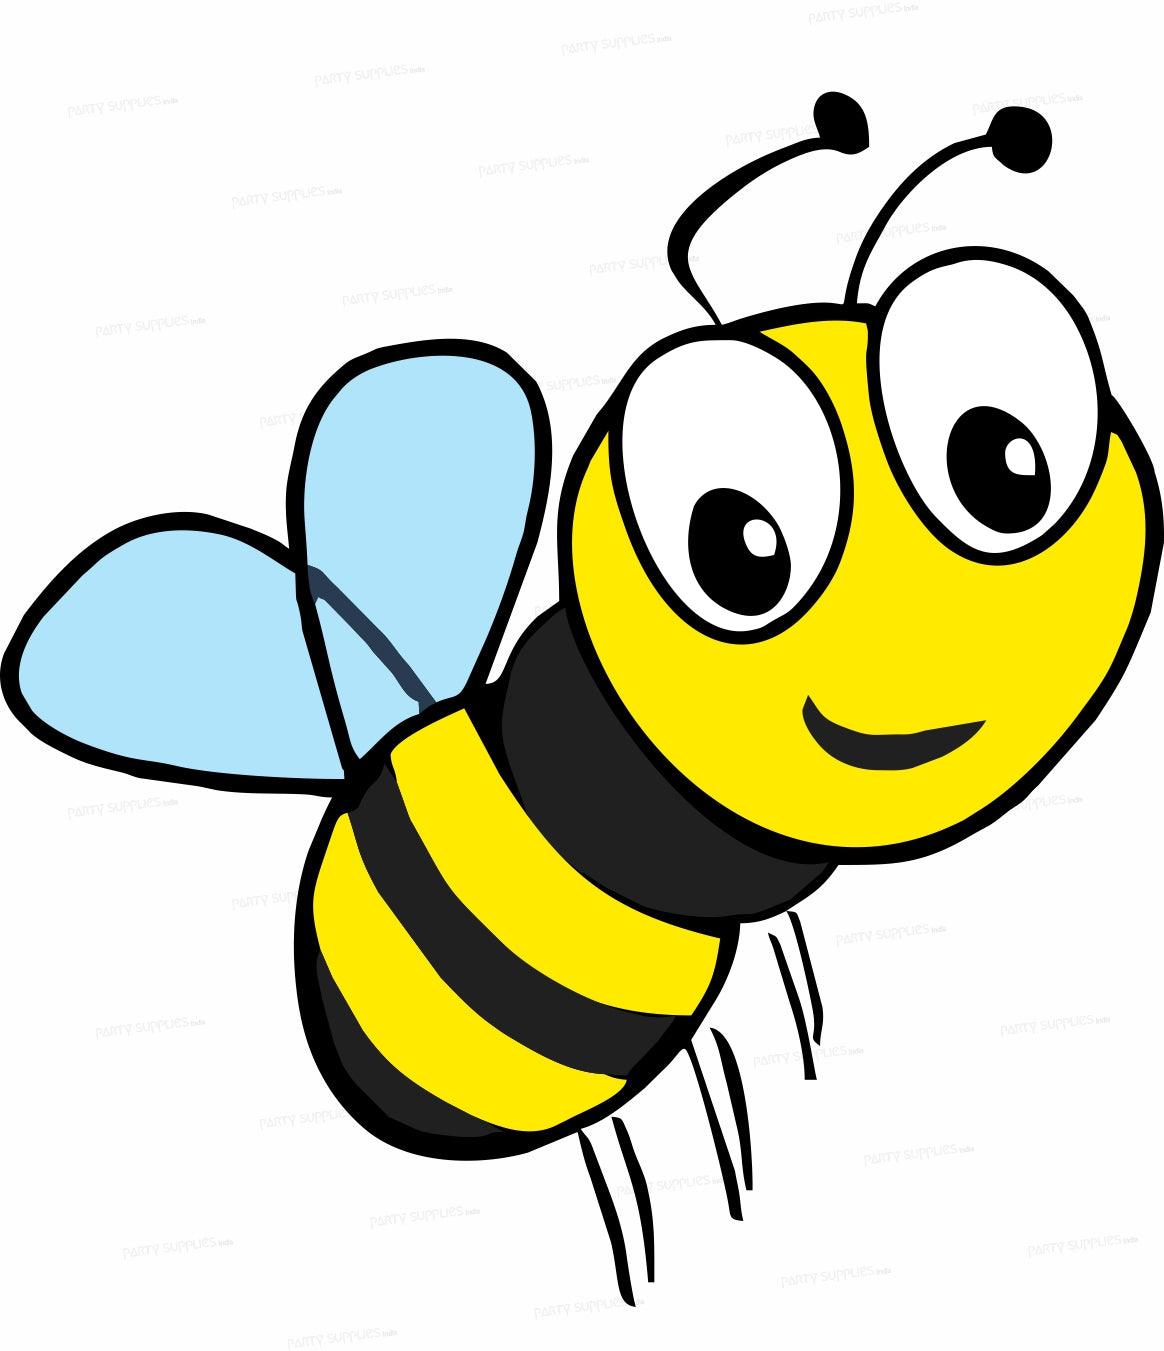 PSI Bumble Bee Theme Cutout - 07